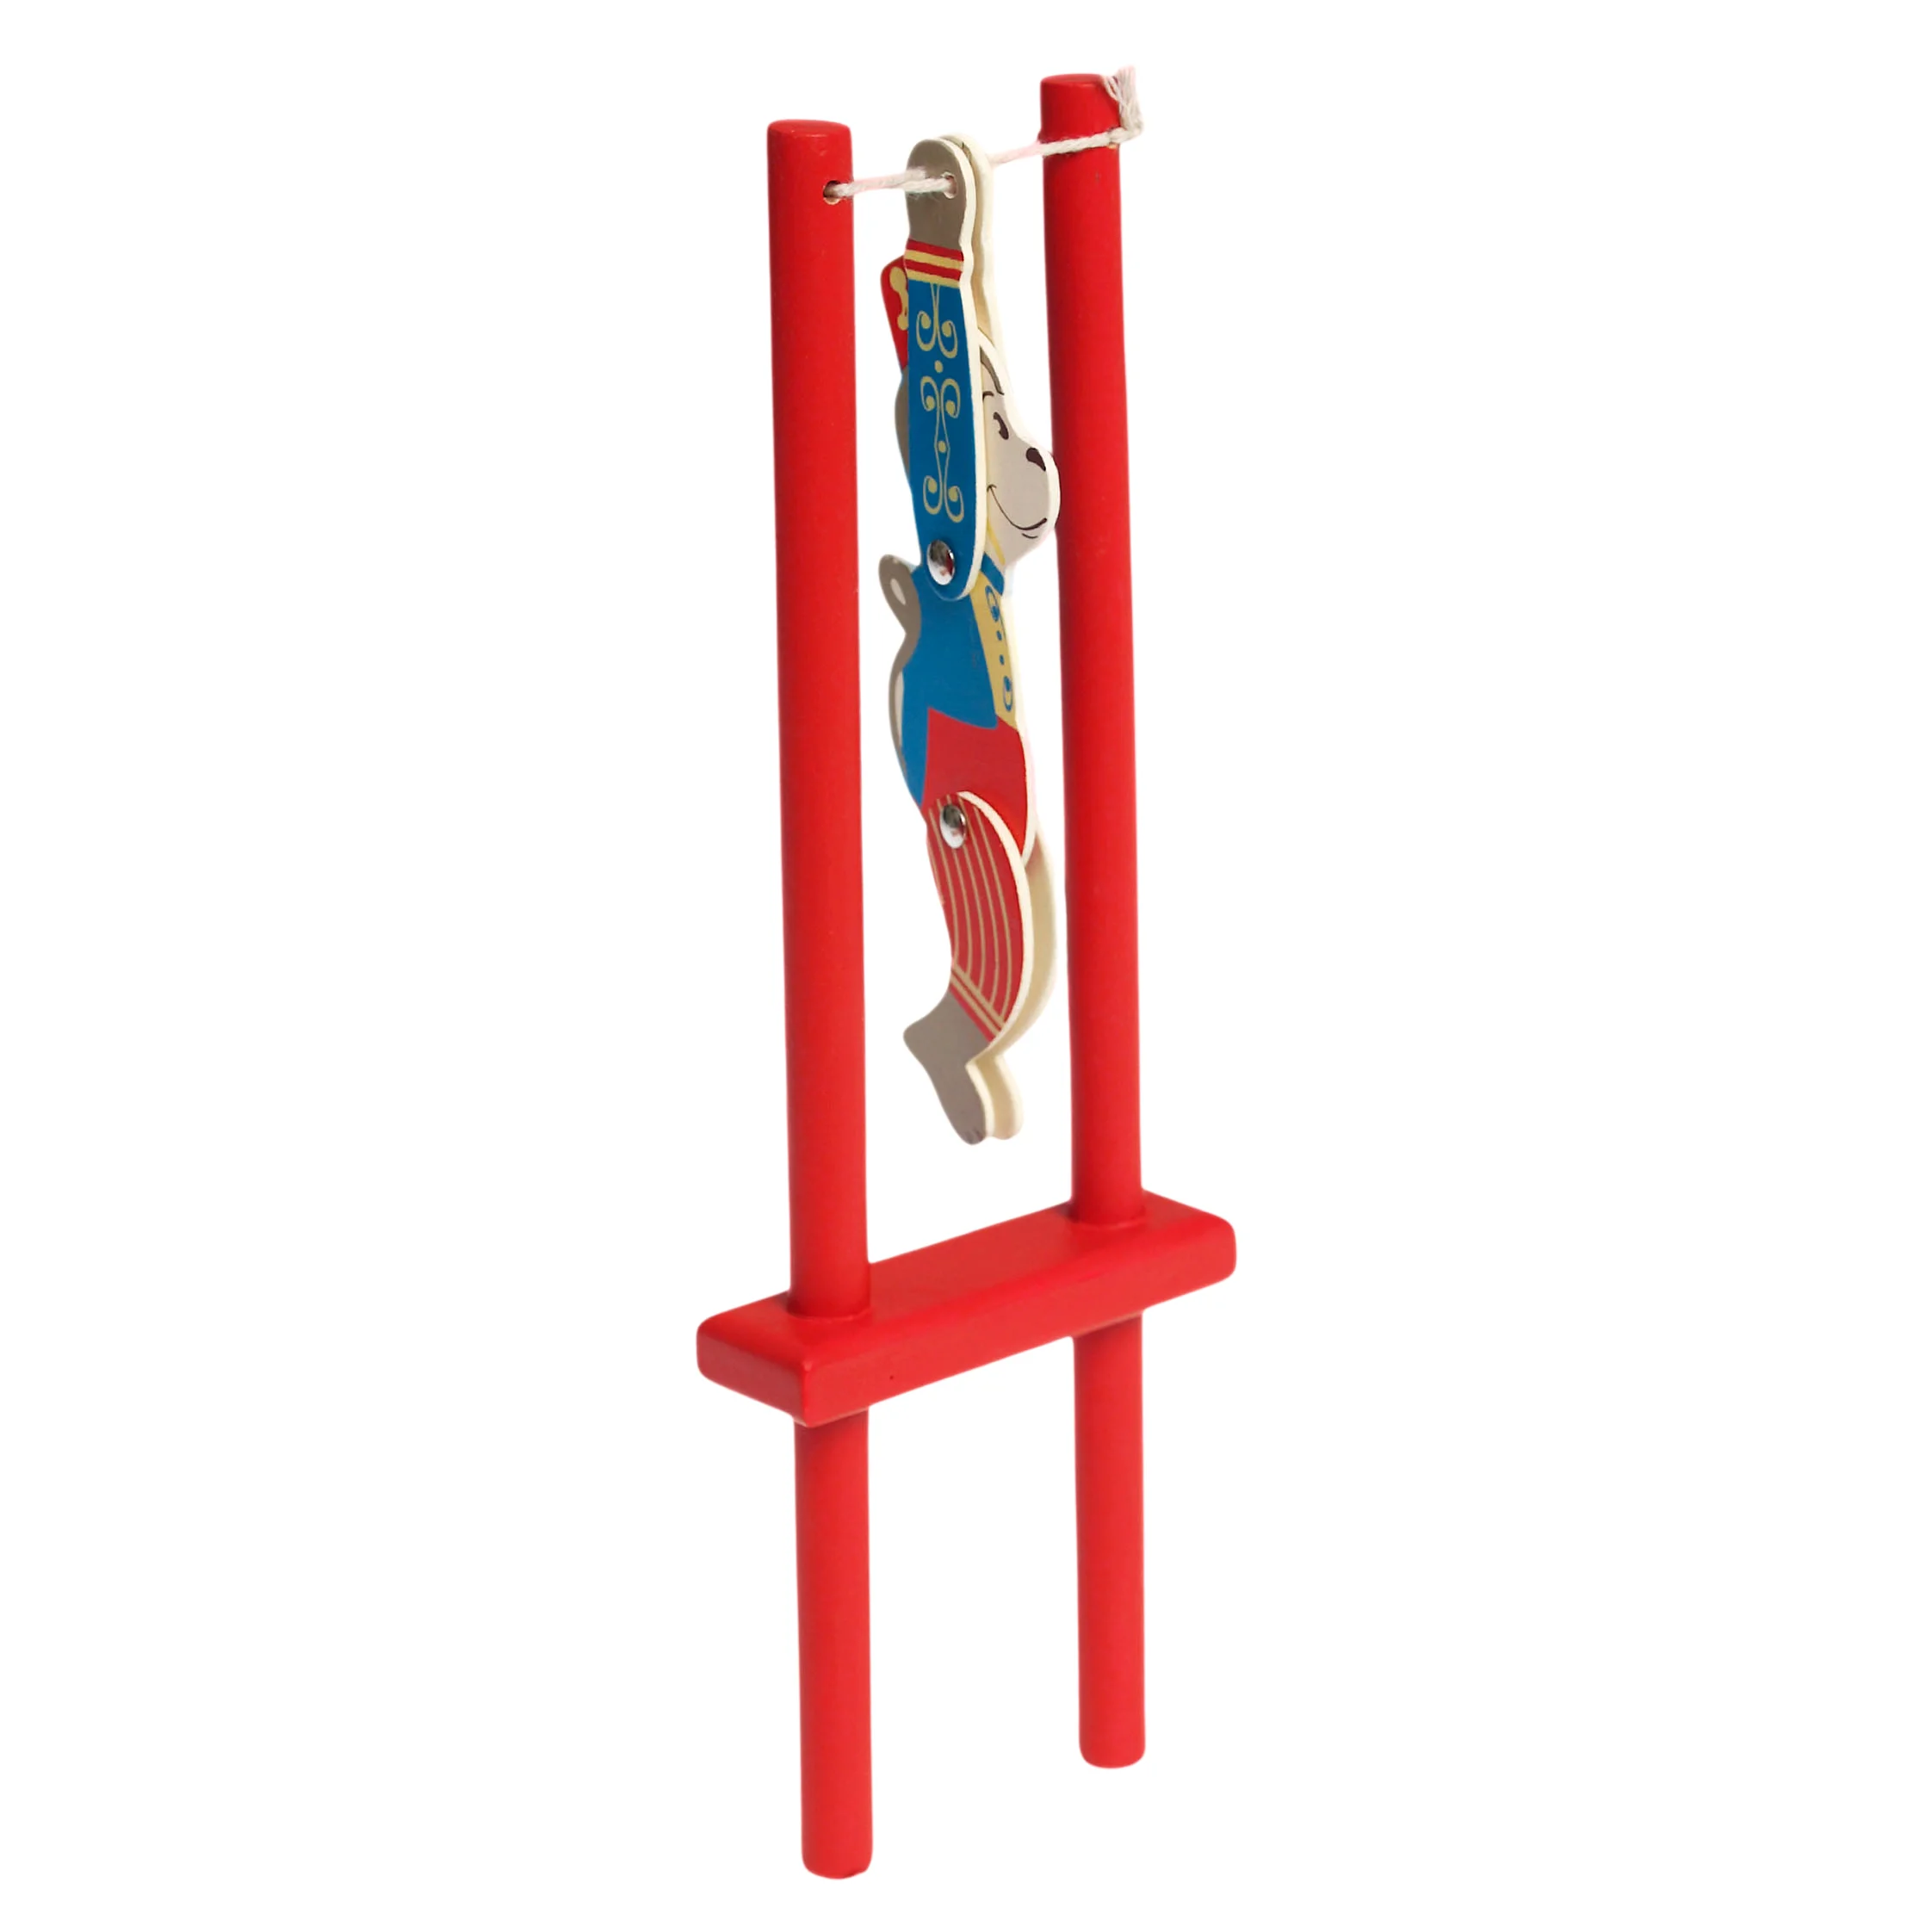 wooden acrobatic toy - sideshow monkey 